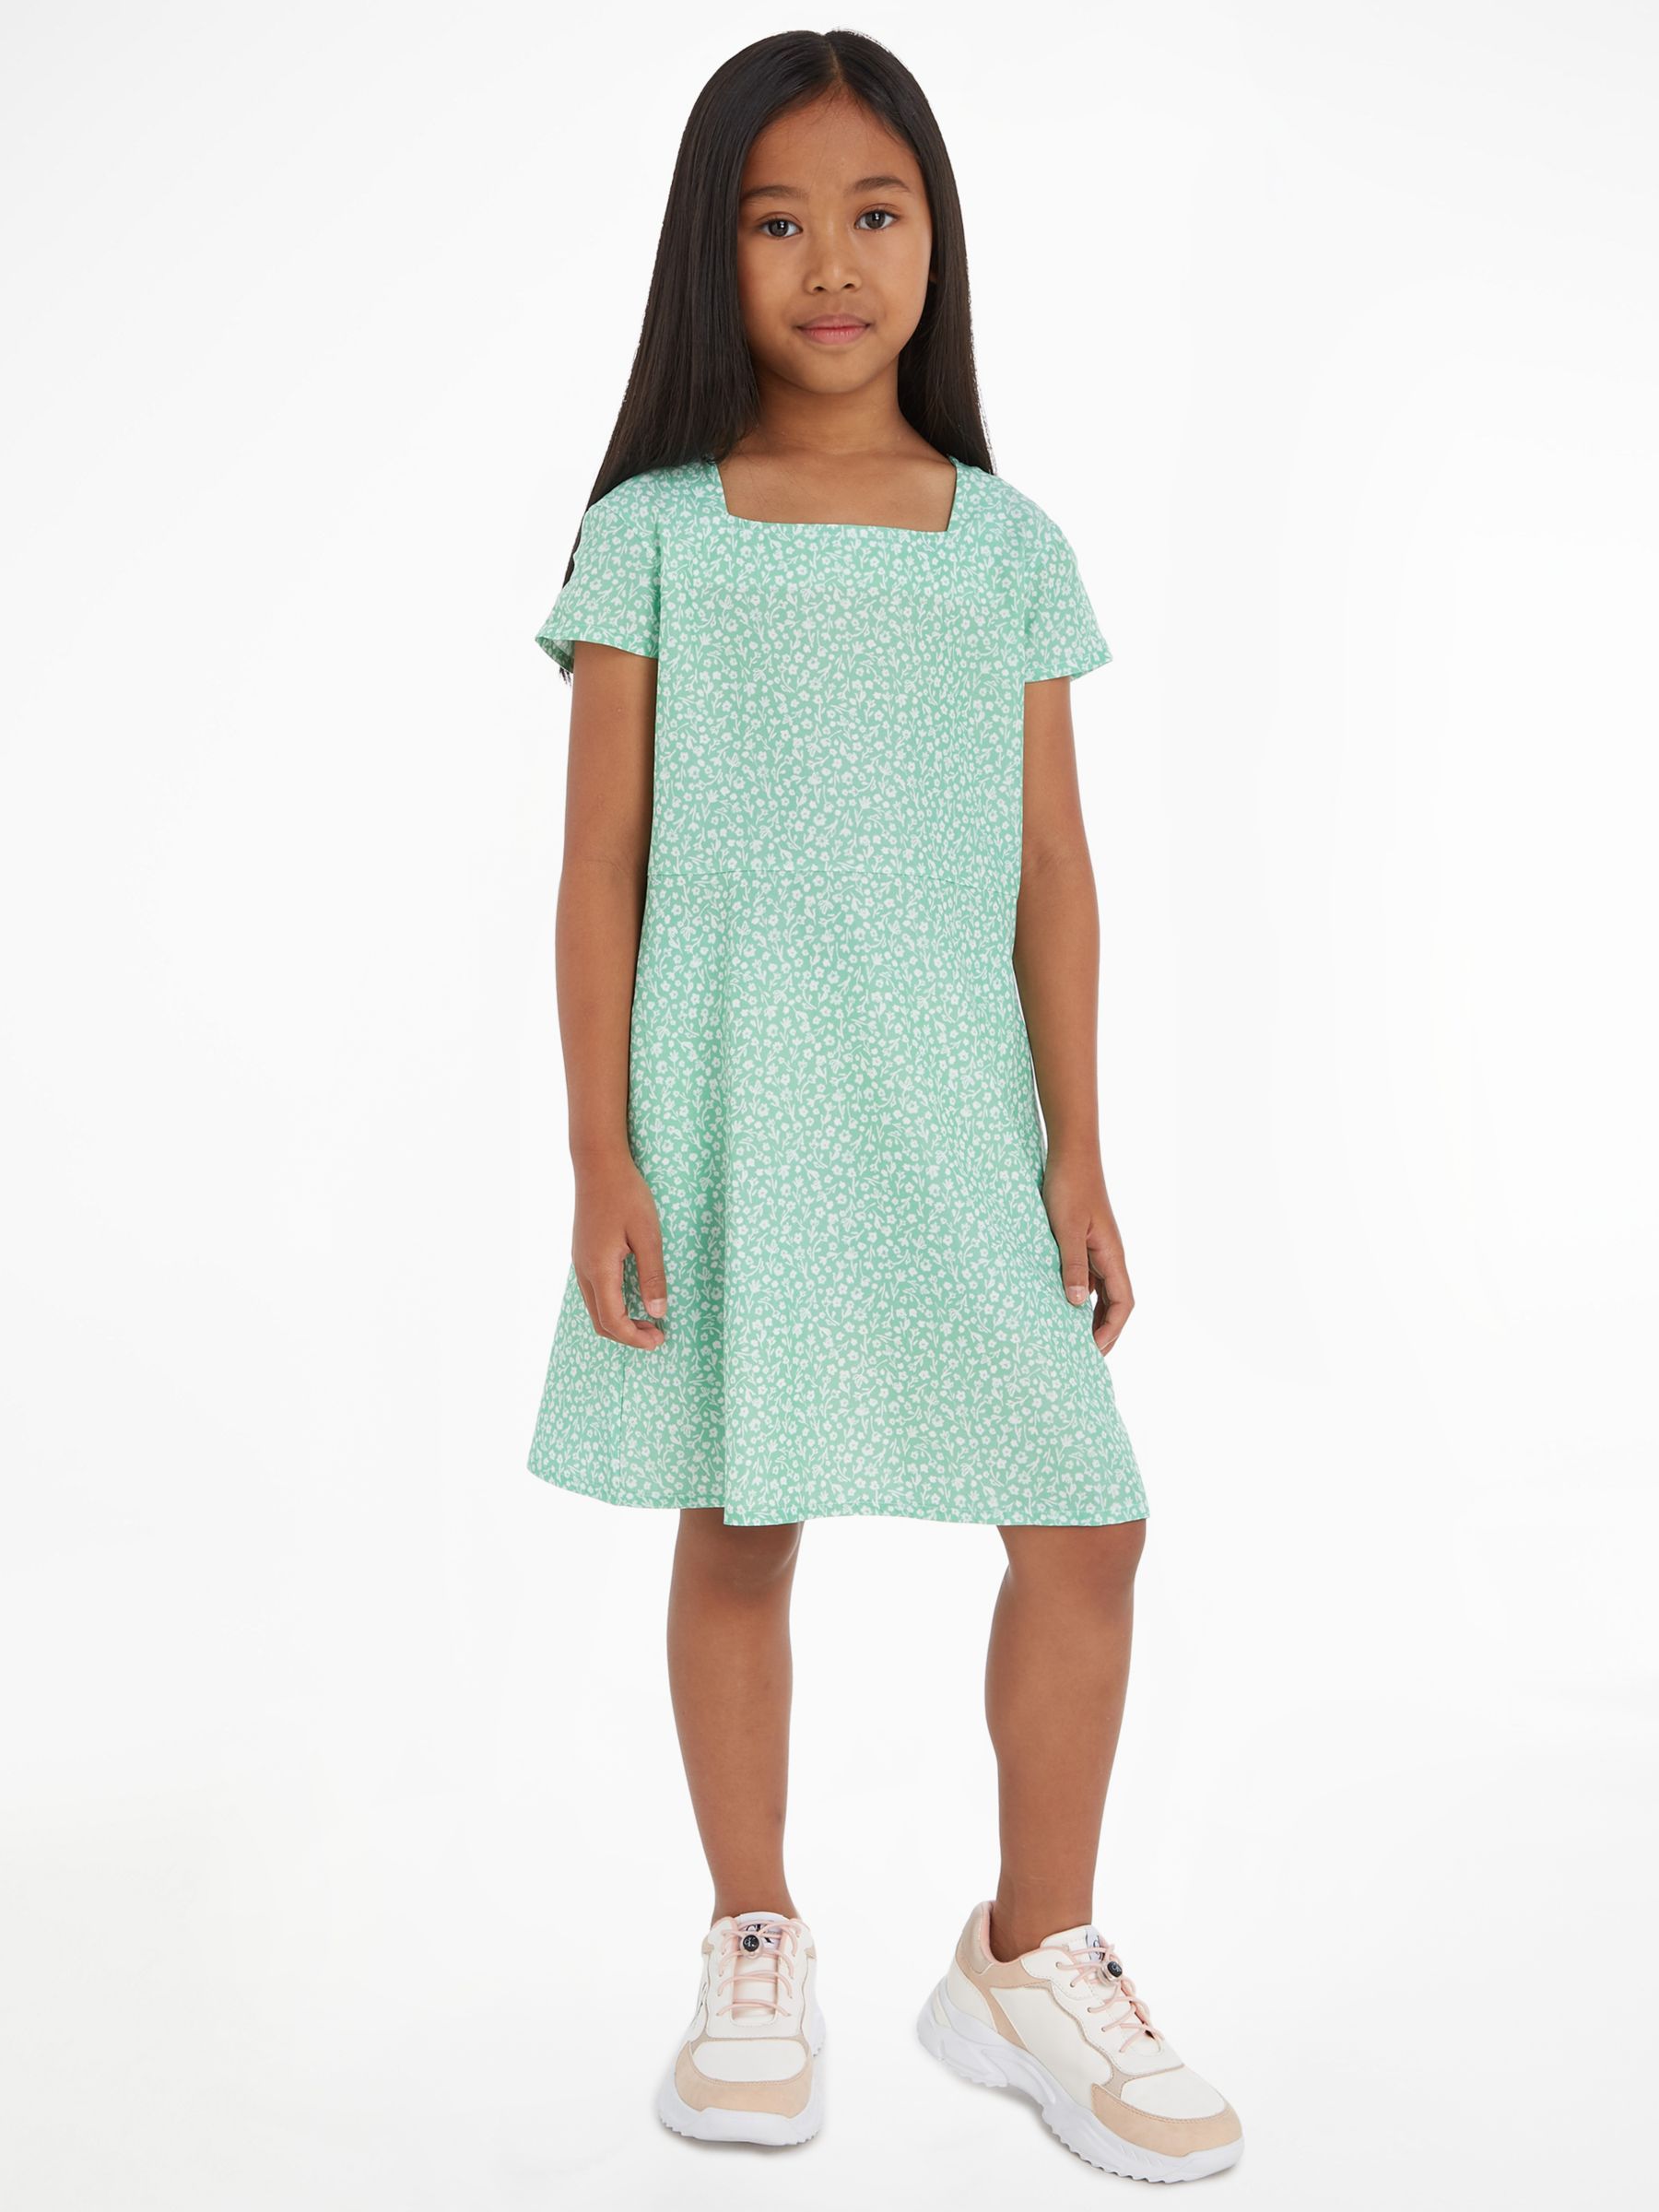 Calvin Klein Jeans Kids' Floral Mini Dress, Multi